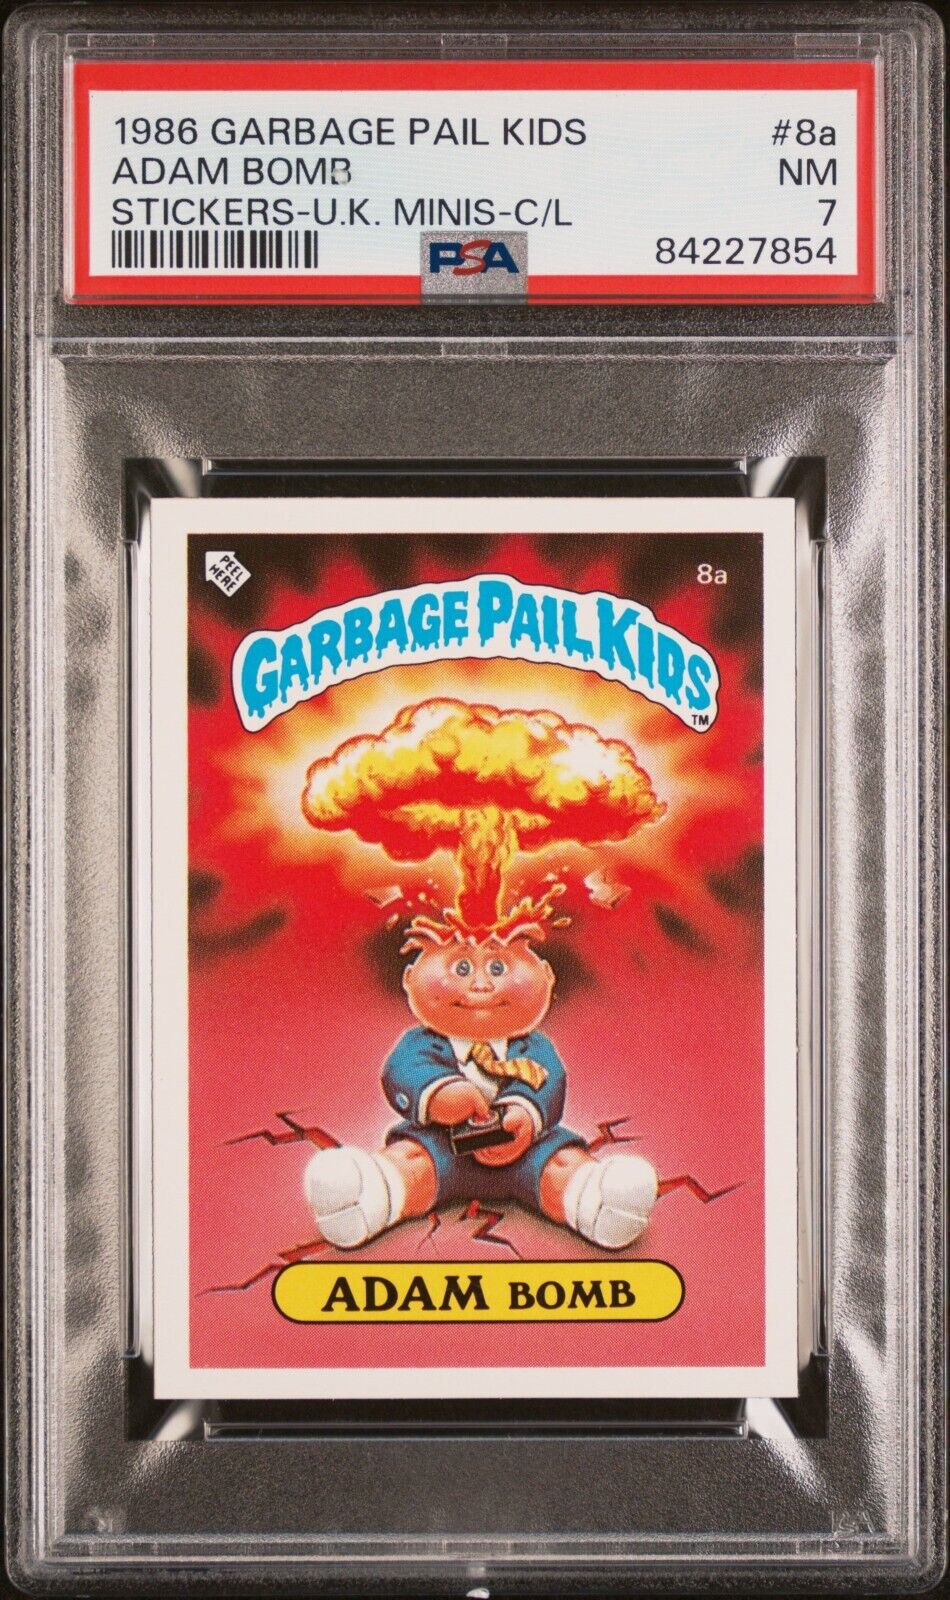 1986 Topps Garbage Pail Kids Series 1 UK Minis ADAM BOMB 8a Checklist Card PSA 7